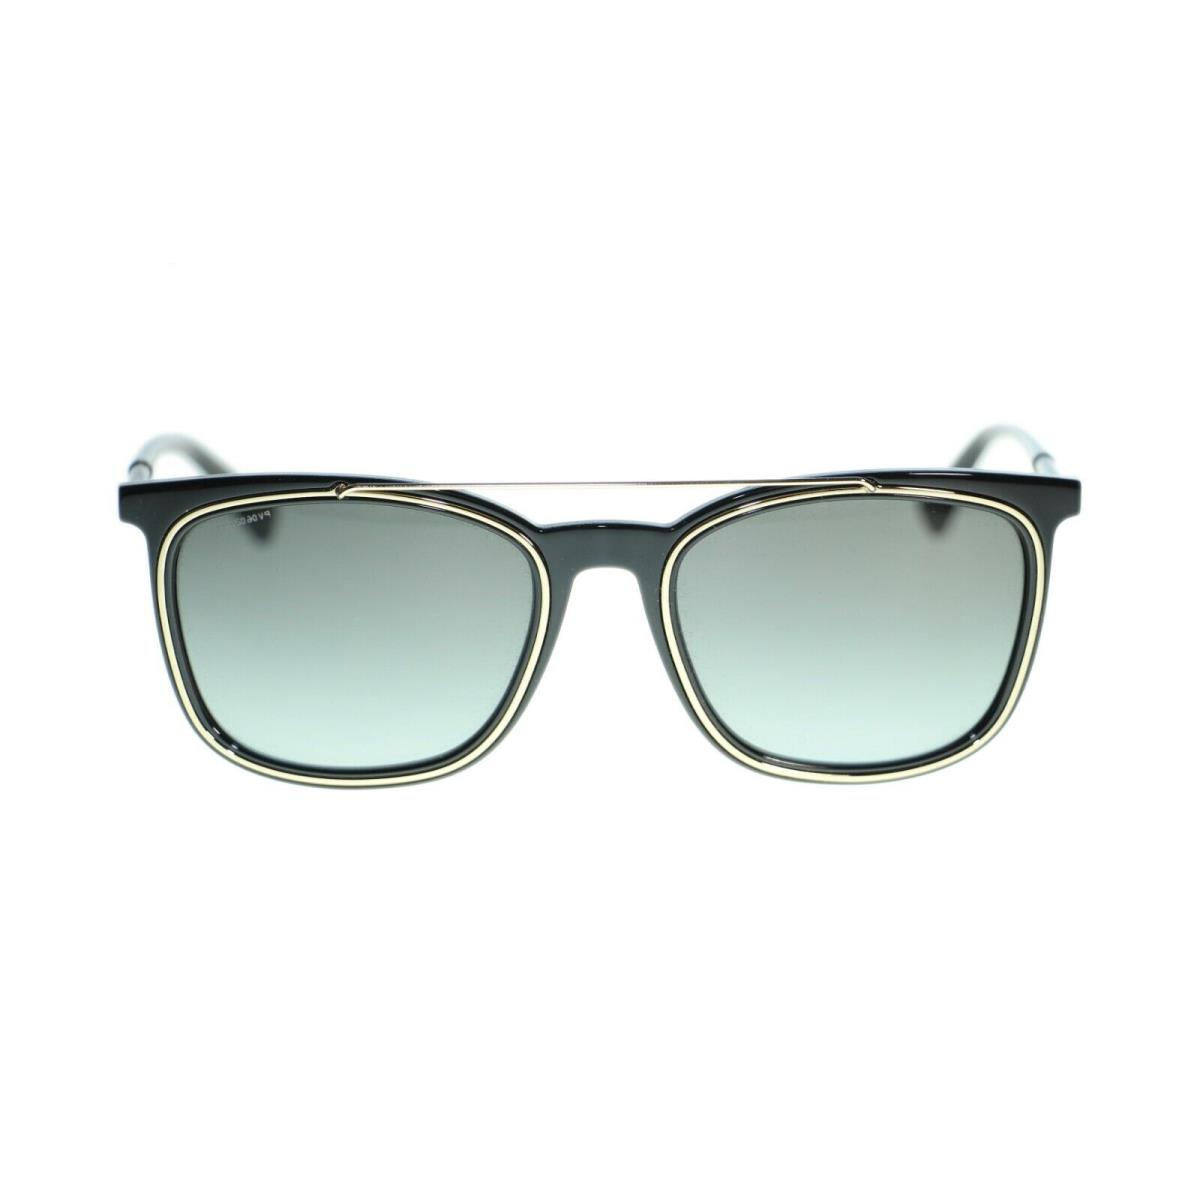 Versace sunglasses  - Havana Frame, Brown Lens